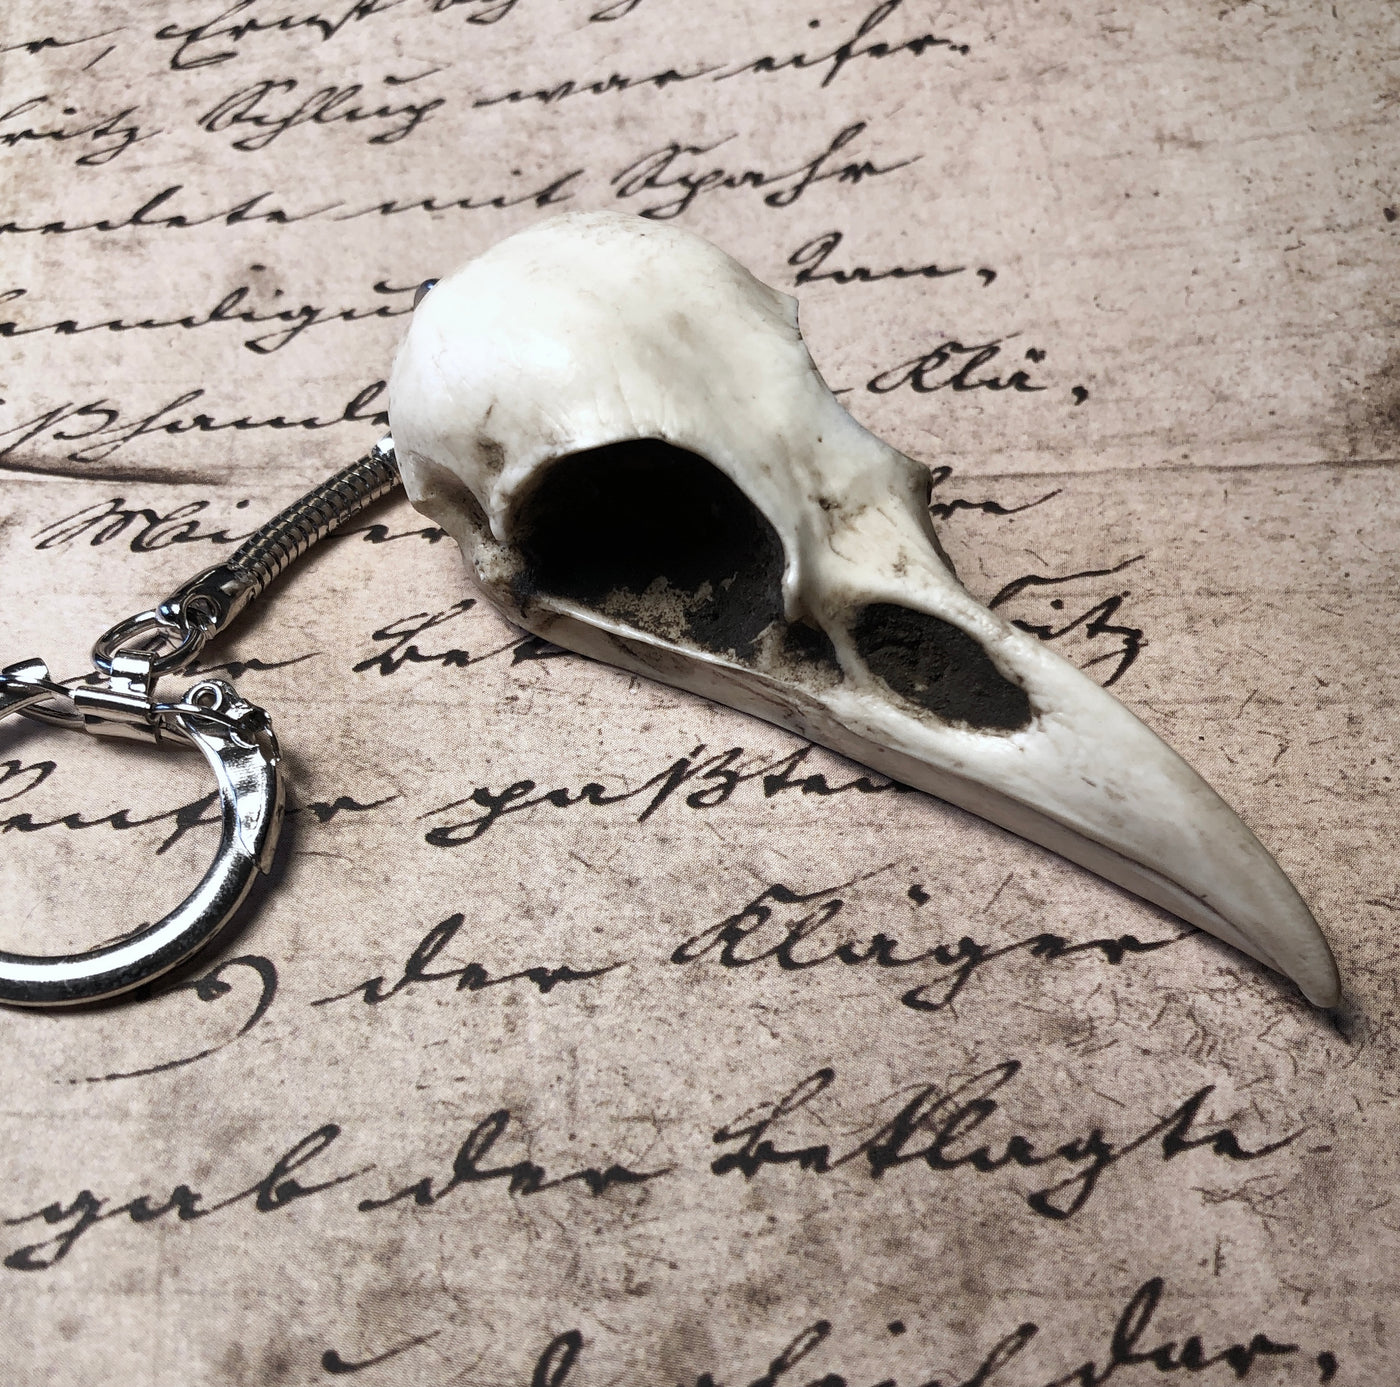 raven skull keychain for goth or biker keys with a creepy skull